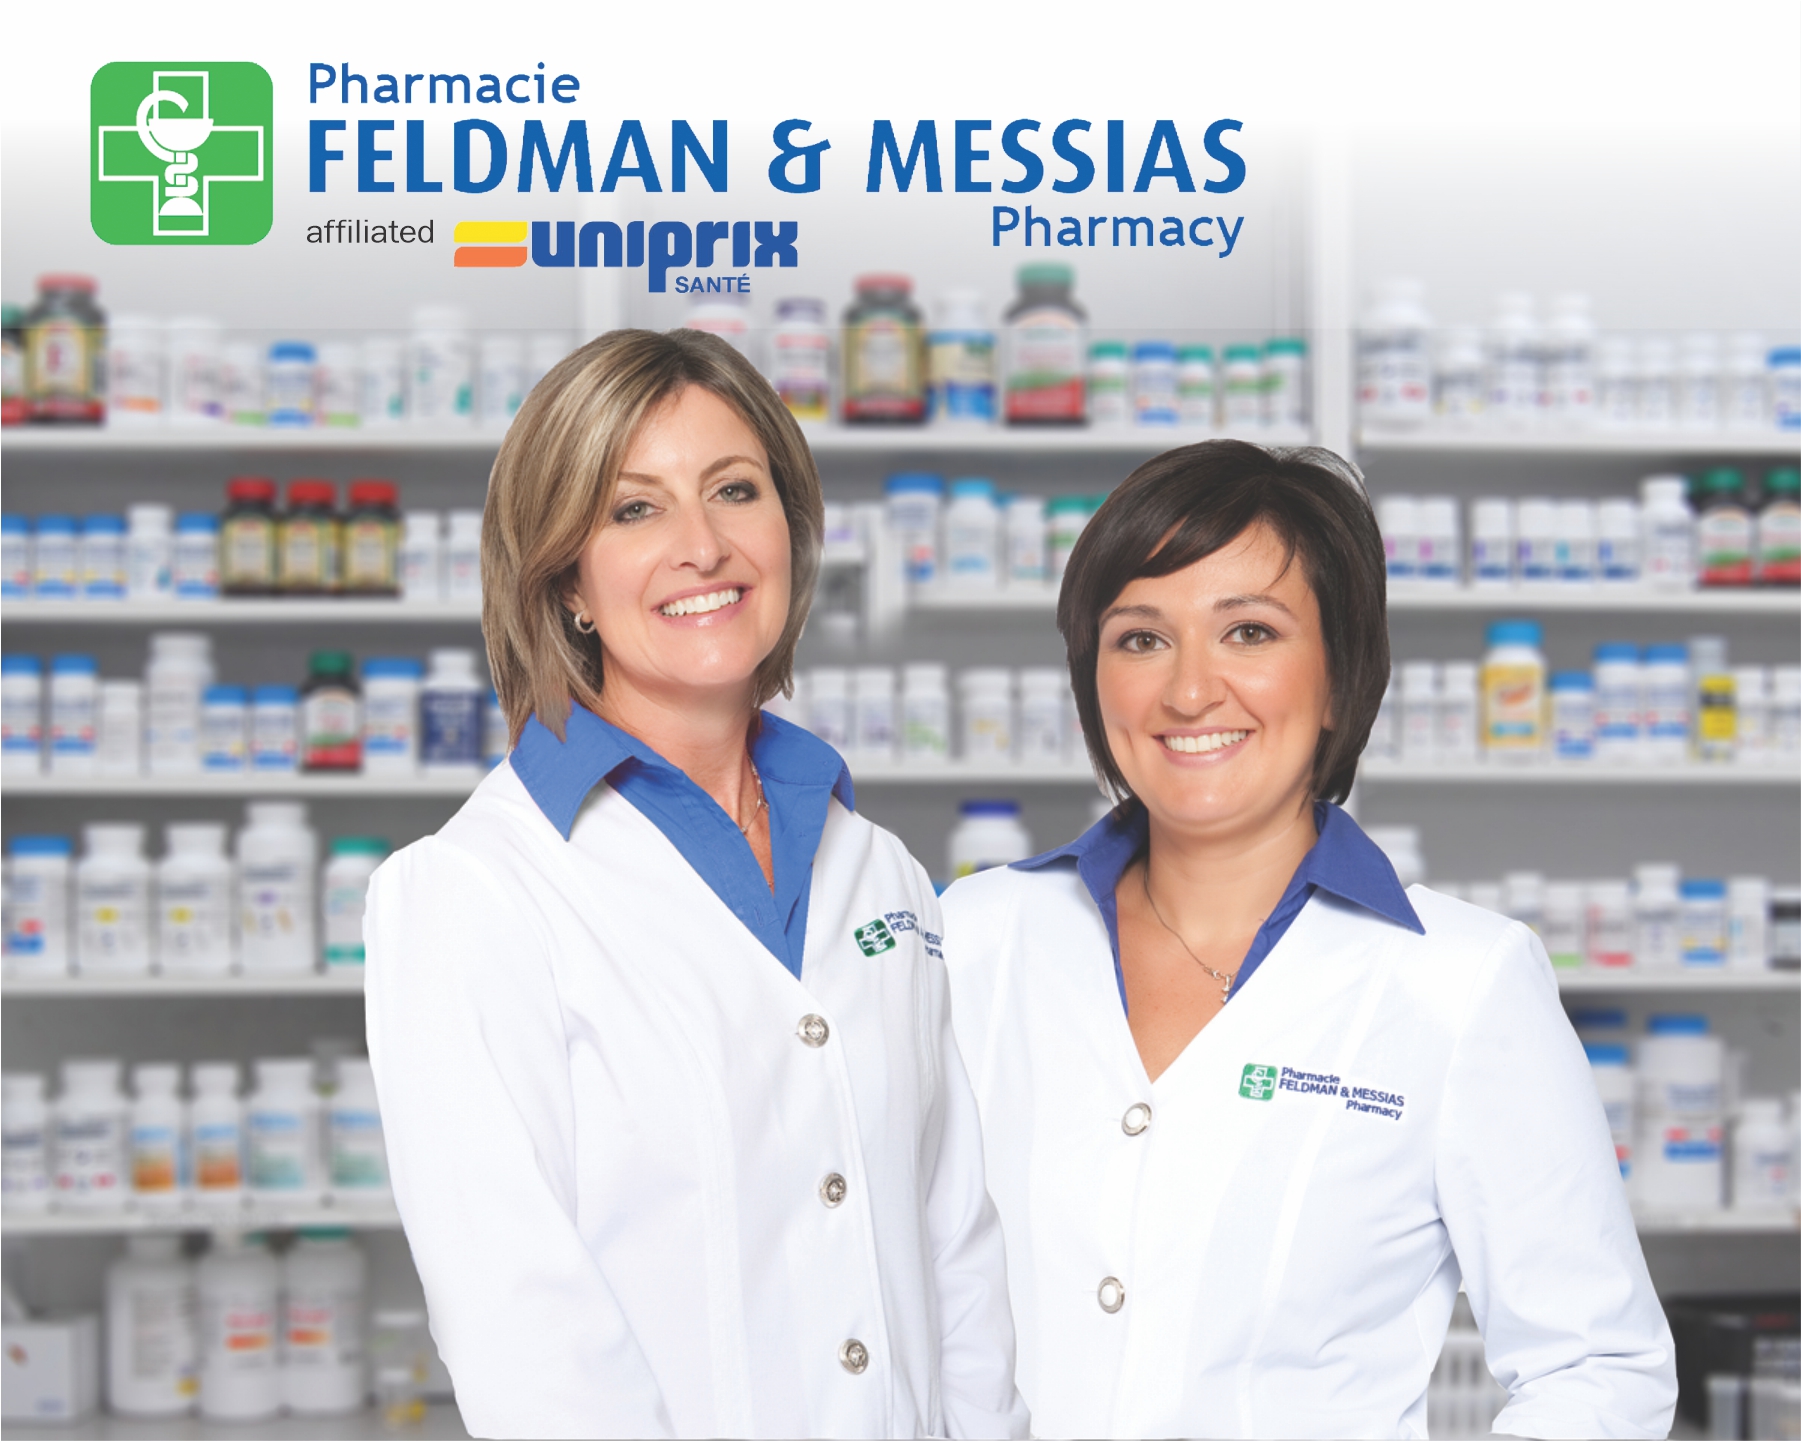  Pharmacy Feldman & Messias